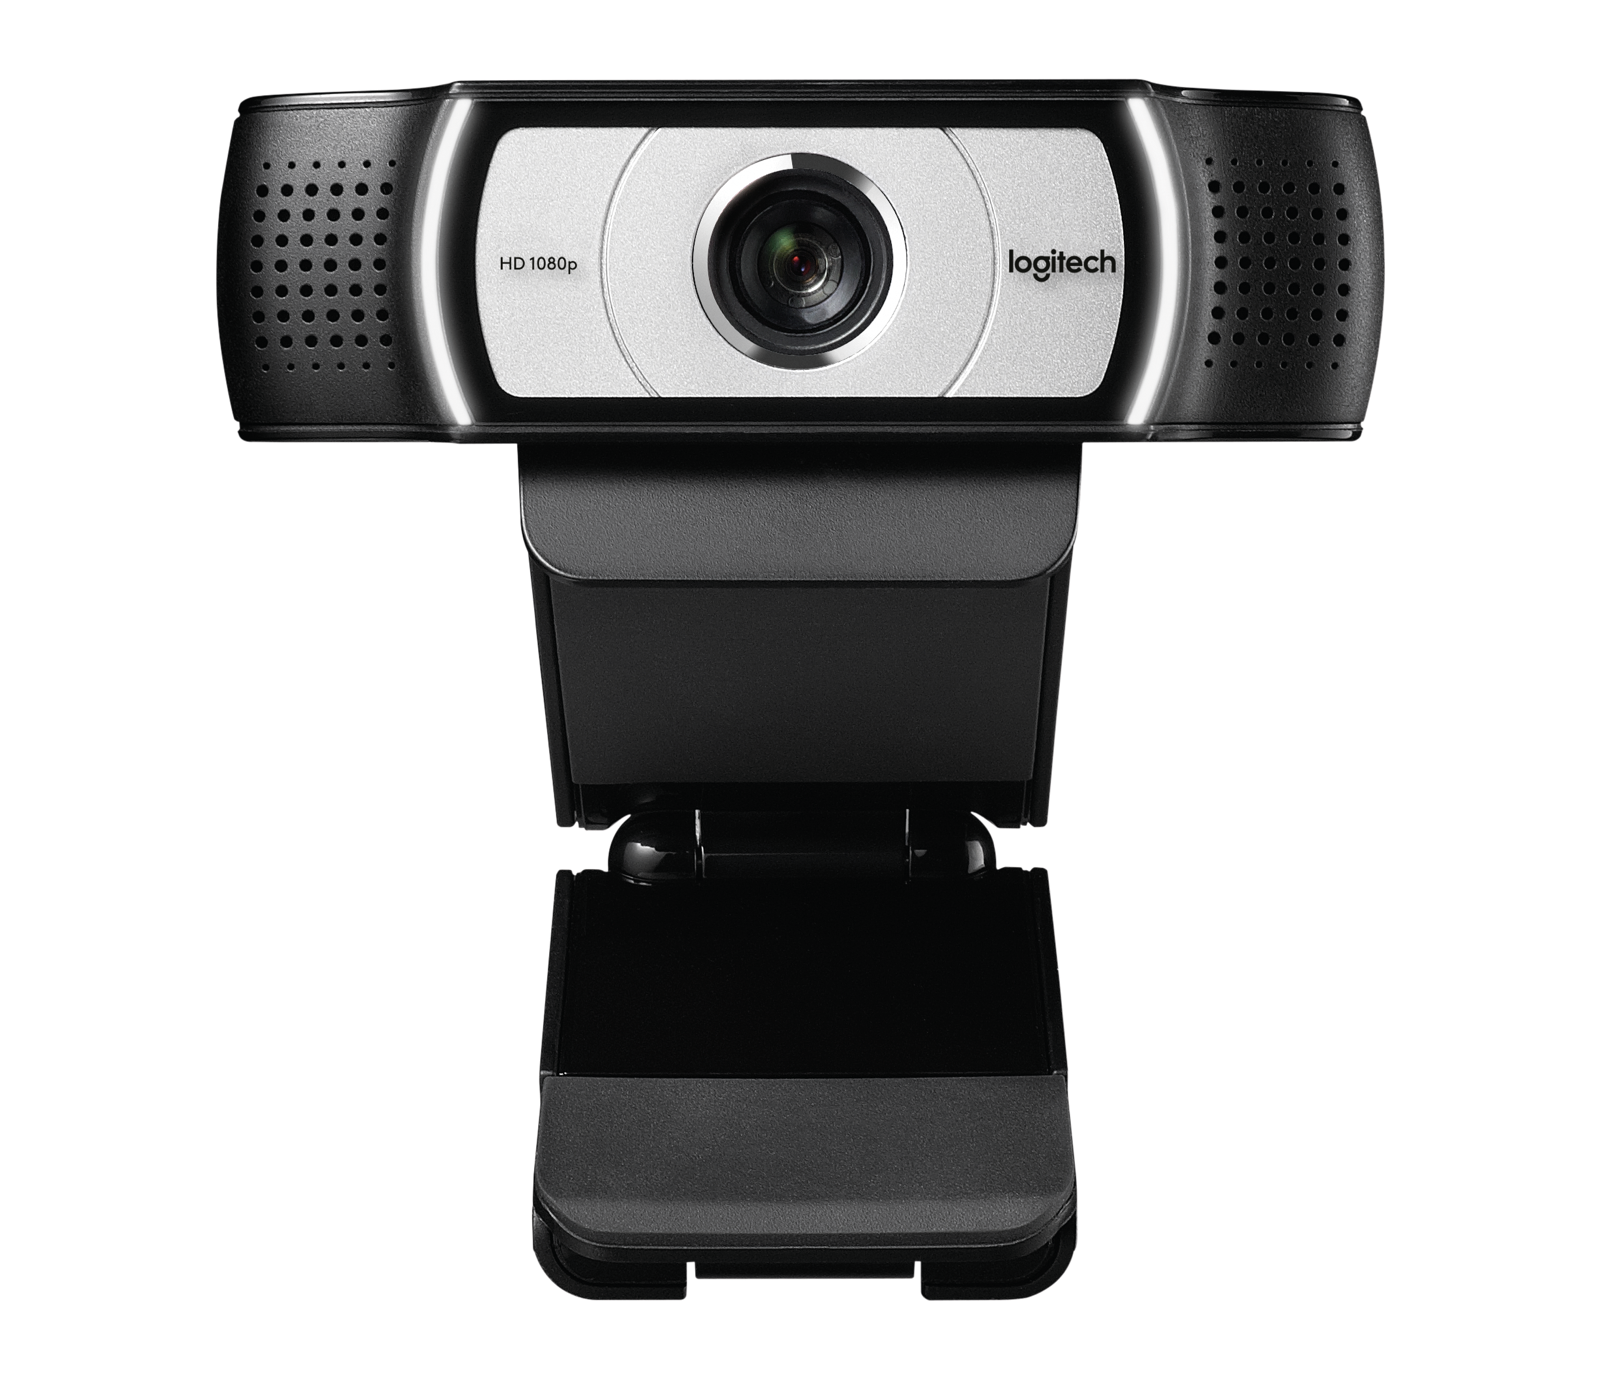 breng de actie Dakloos Nadruk Logitech C930e 1080p Business Webcam with Wide Angle Lens